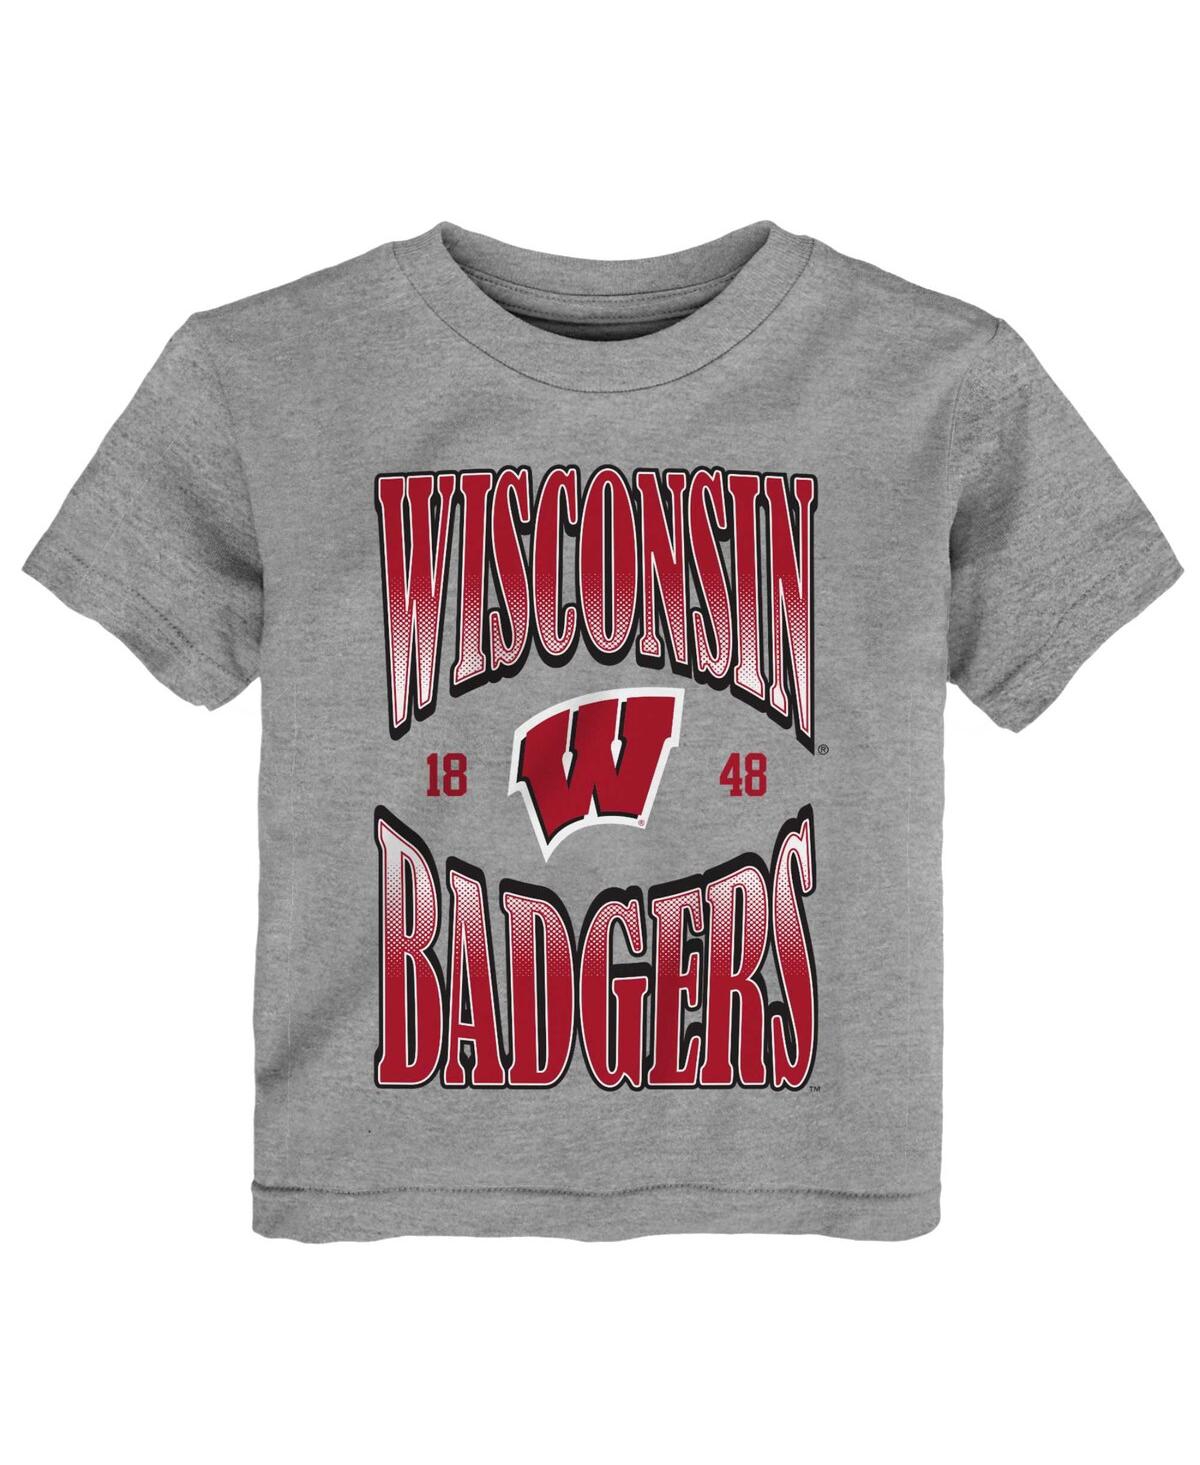 Outerstuff Babies' Toddler Boys And Girls Heather Gray Wisconsin Badgers Top Class T-shirt